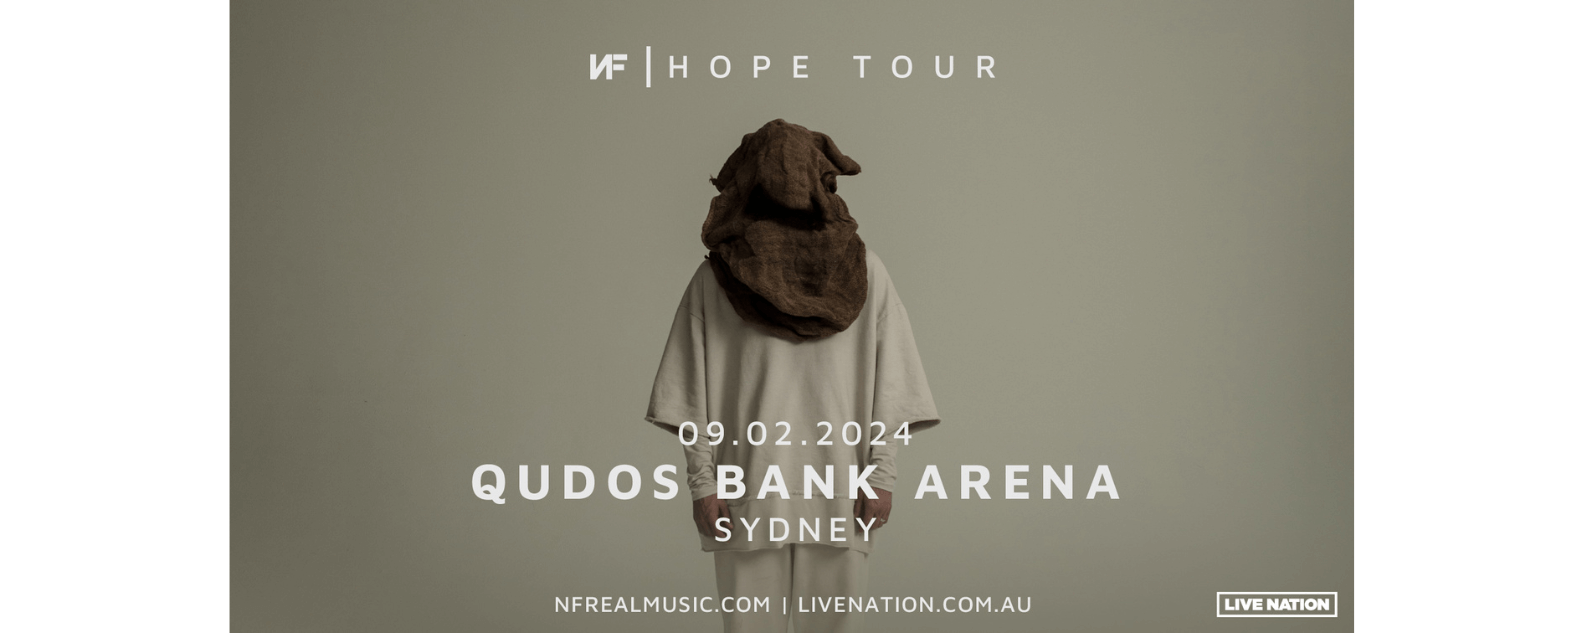 NF | HOPE Tour Qudos Bank Arena banner